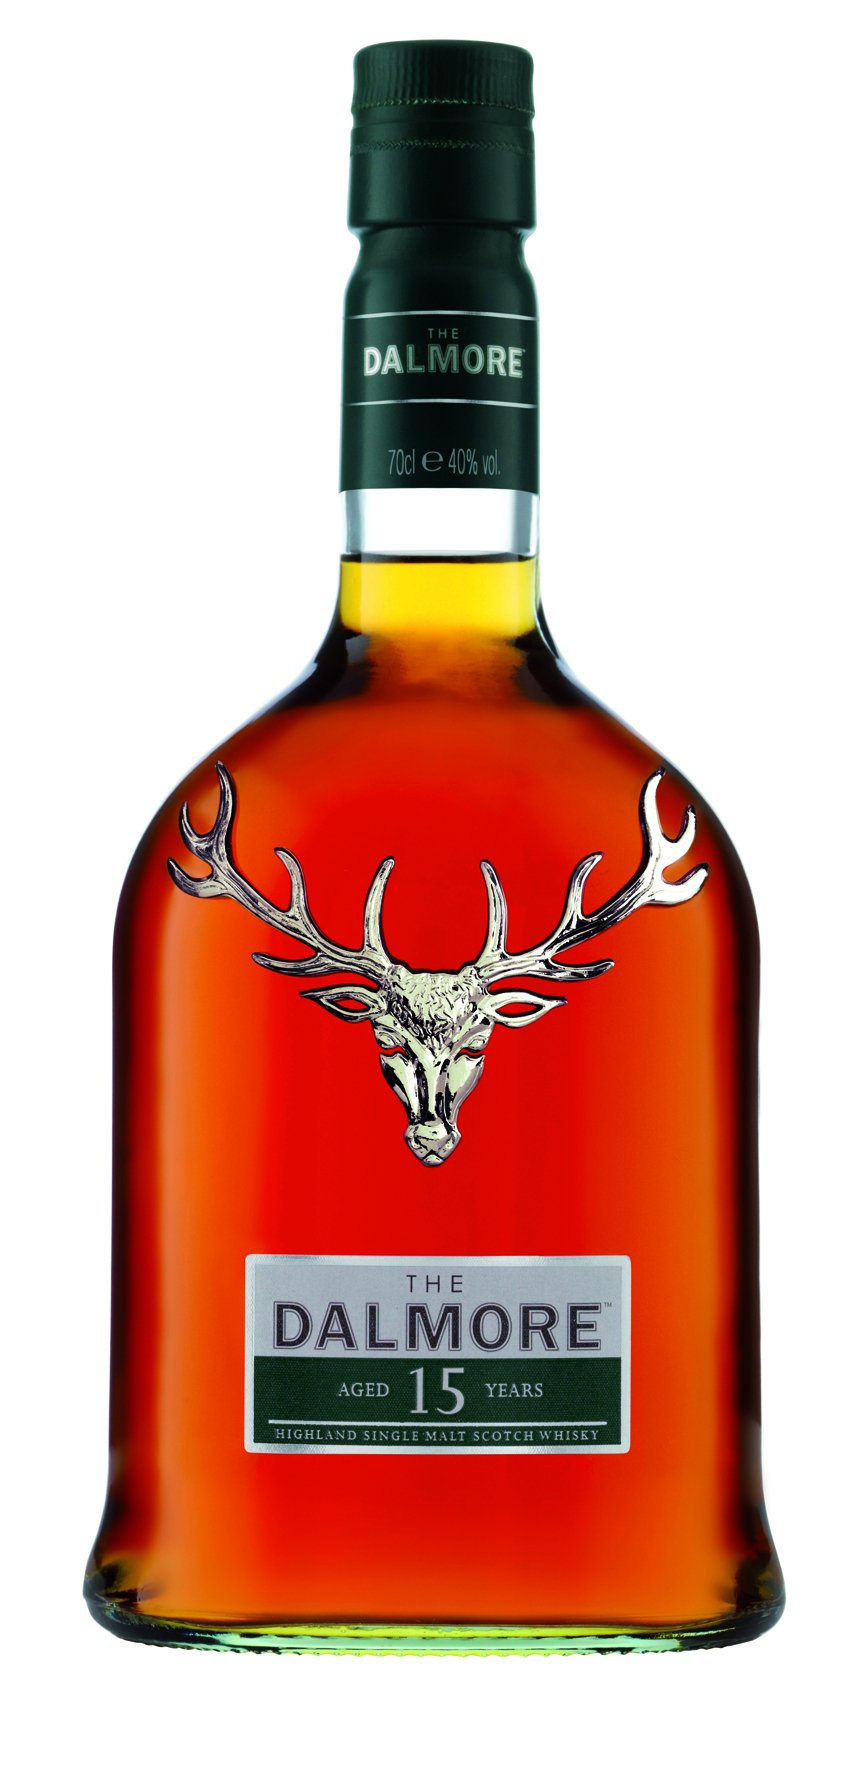 Dalmore 15 Jahre Whisky